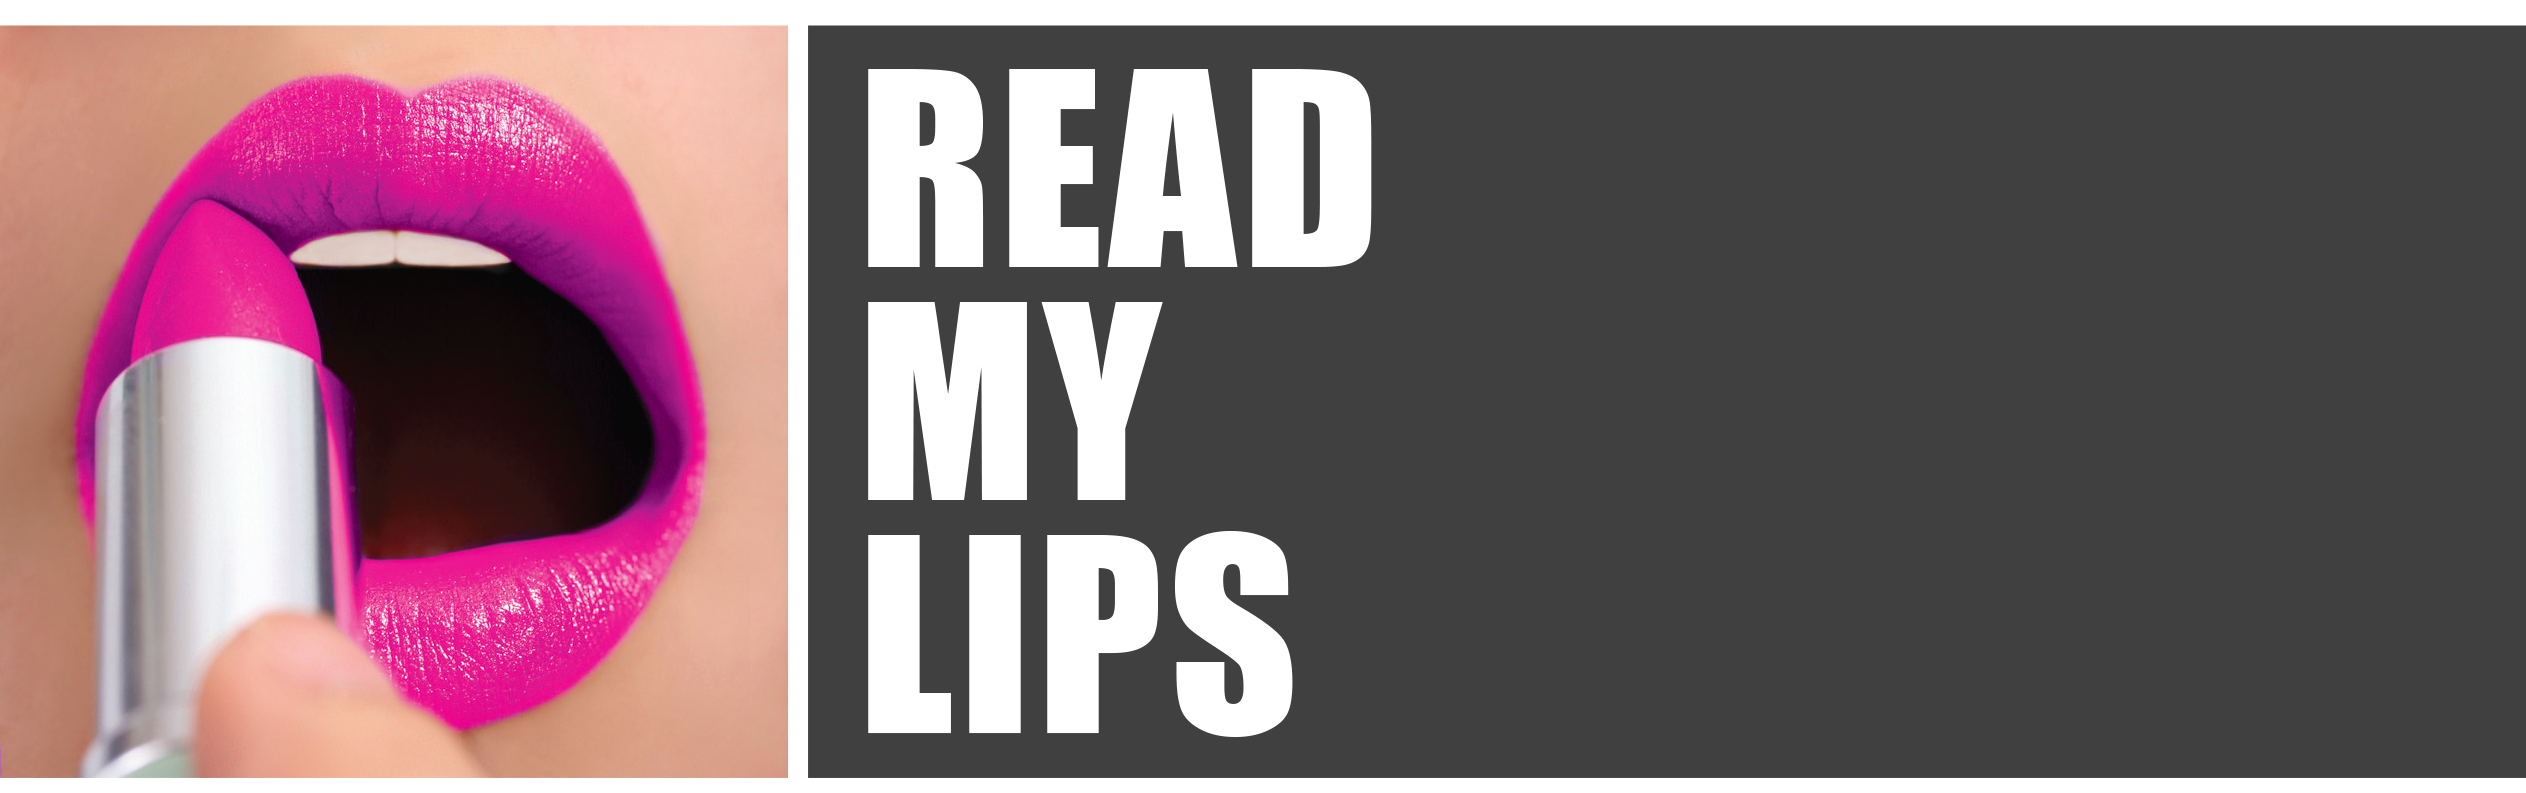 read my lips by teri brown